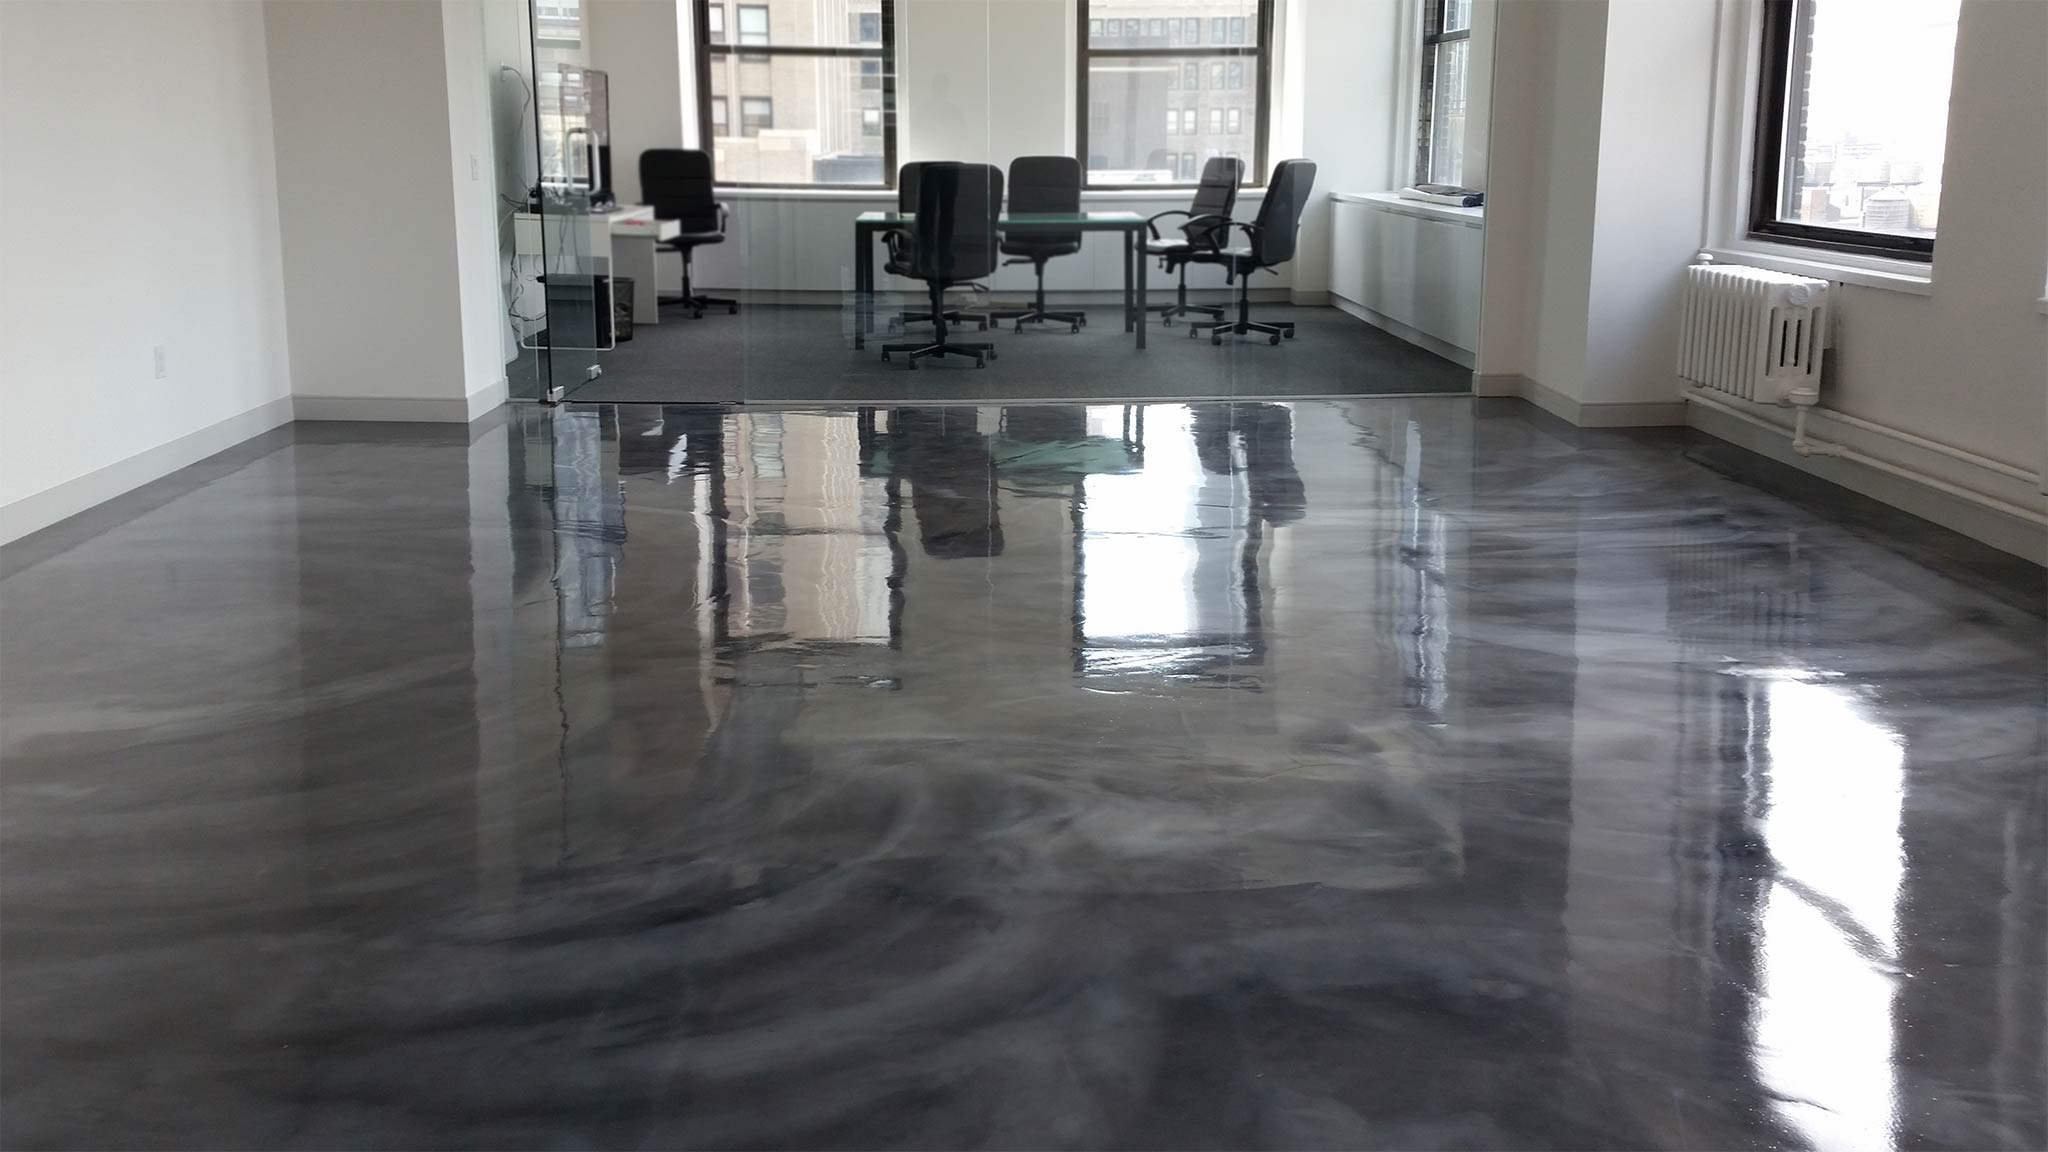 Metallic Epoxy flooring in an office. Lumiere by Duraamen